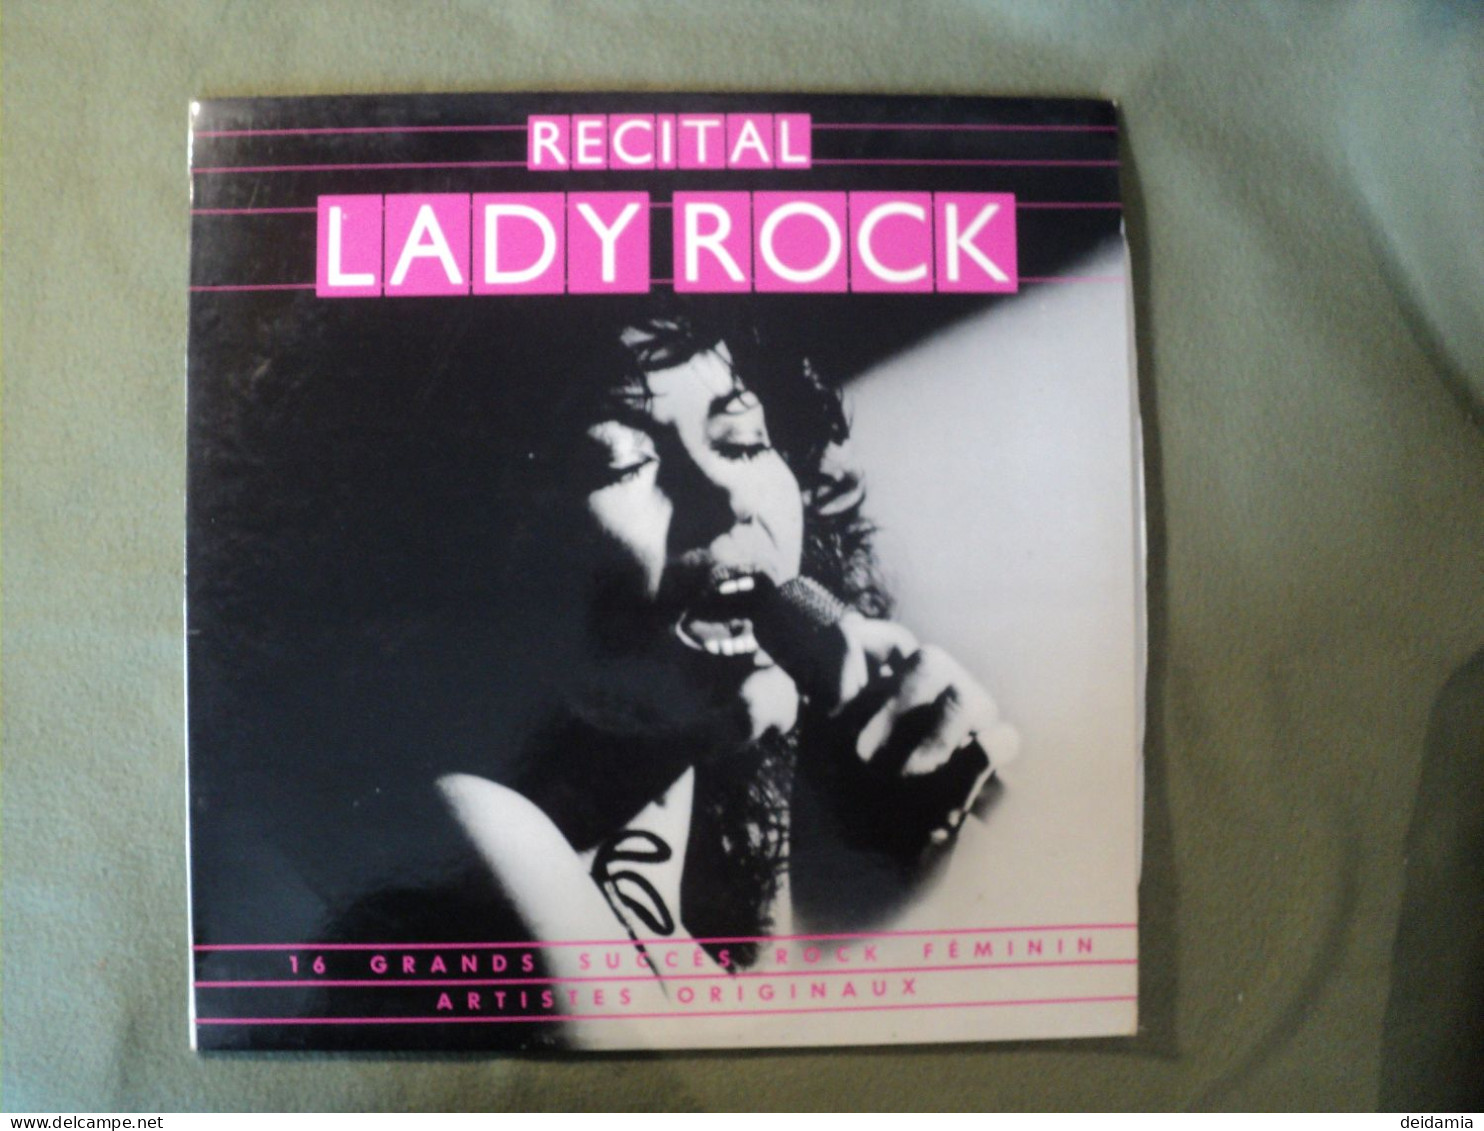 33 TOURS VARIOUS ARTISTS. LADY ROCK. RECITAL. 1977. BLP 7805 MARY WELLS / SANDI POSEY / SKEETER DAVIS / THE EXCITERS / T - Hard Rock & Metal